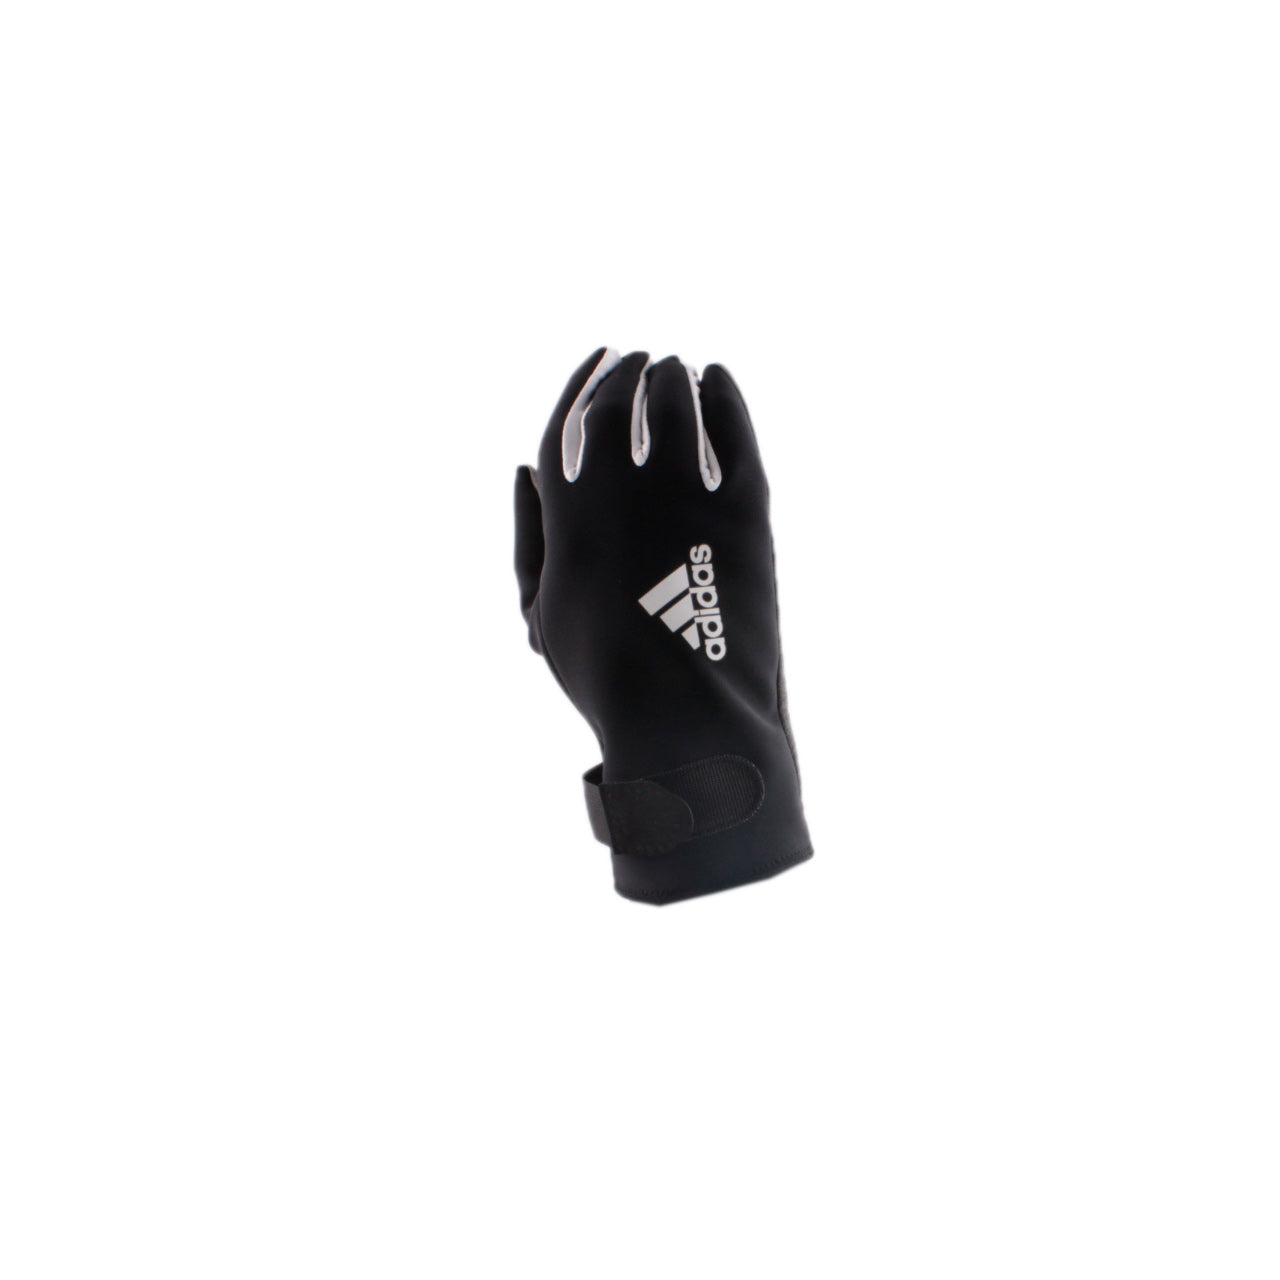 Adidas Cross V13 Handschuhe Glove X-Country Glove Biathlon Alkantara M65420 7